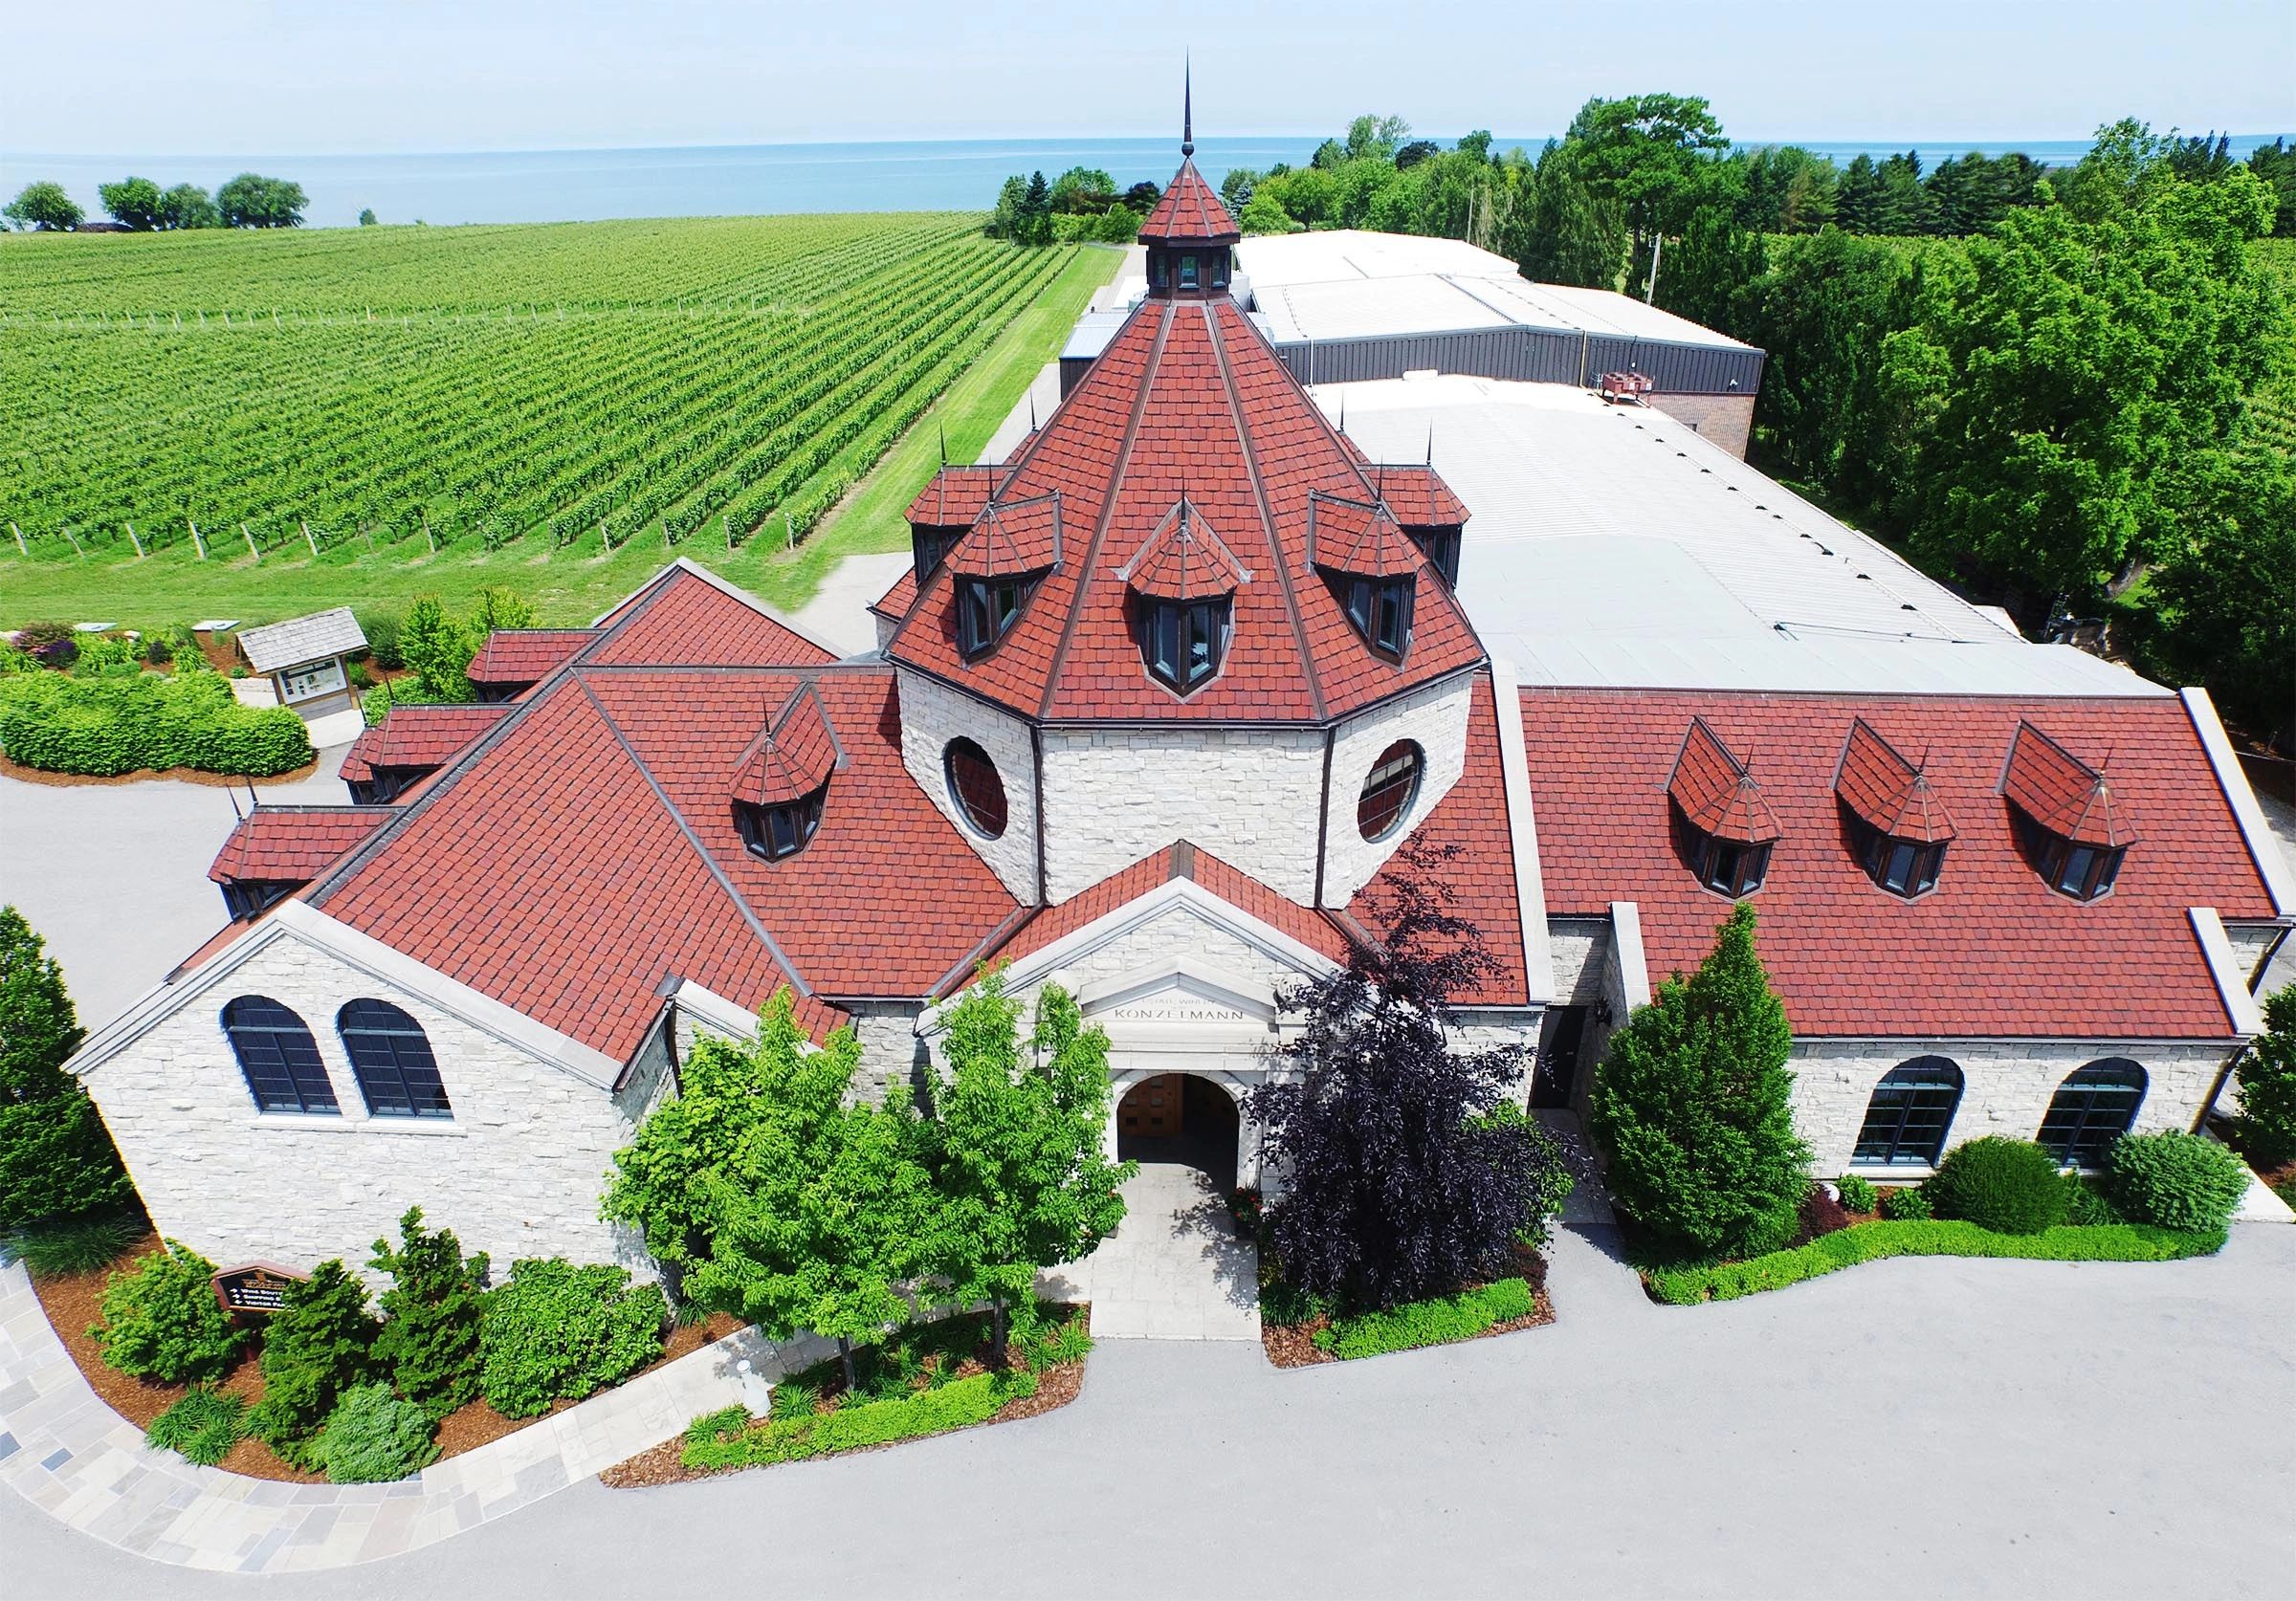 konzelmann estate winery tours